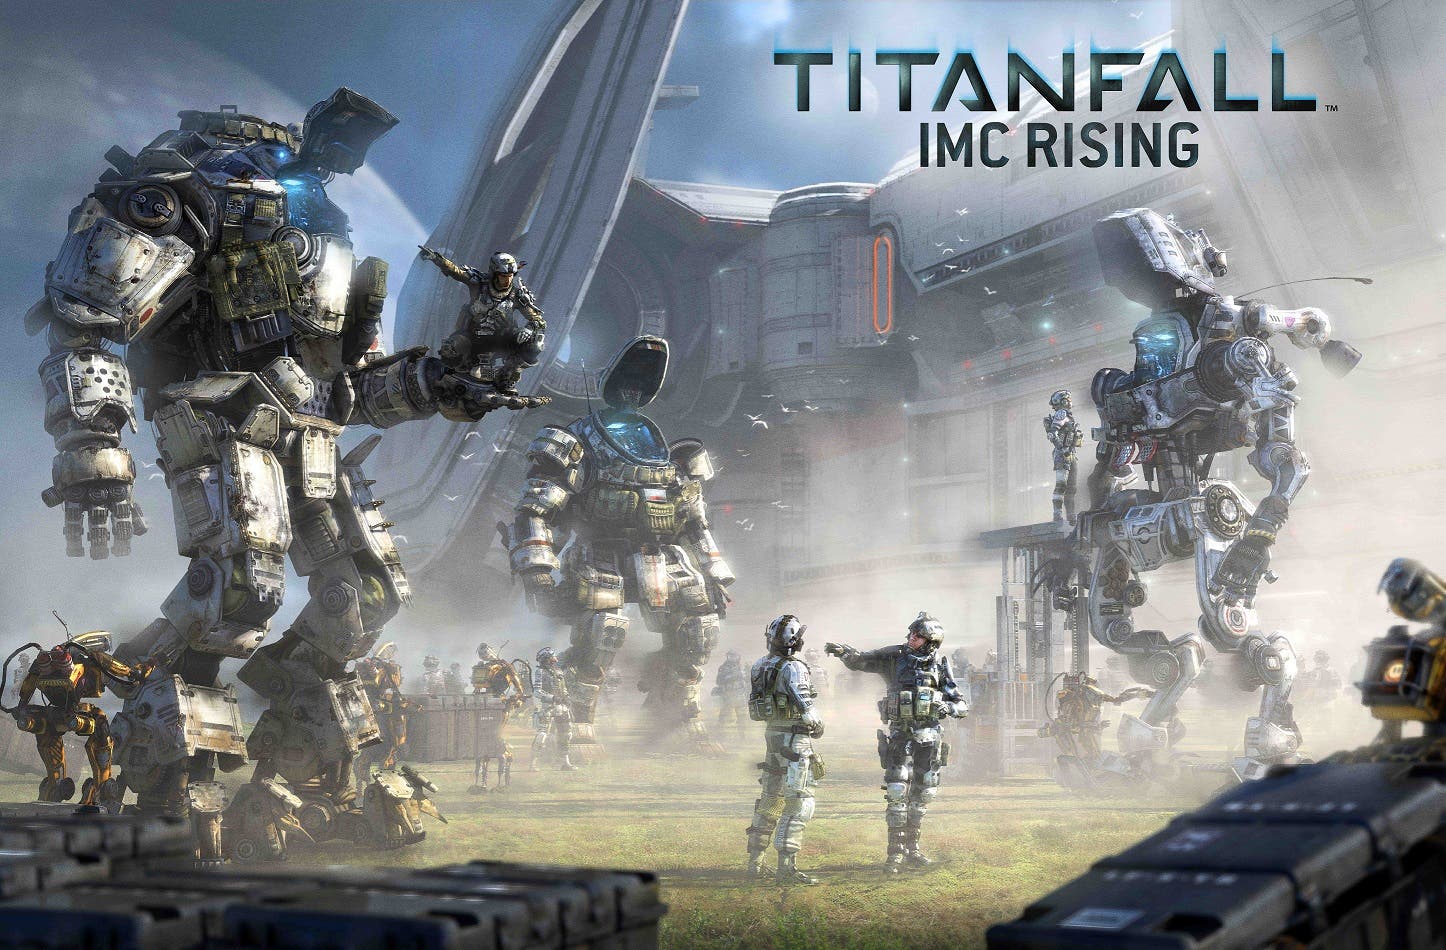 Buy Titanfall® 2: Colony Reborn Bundle